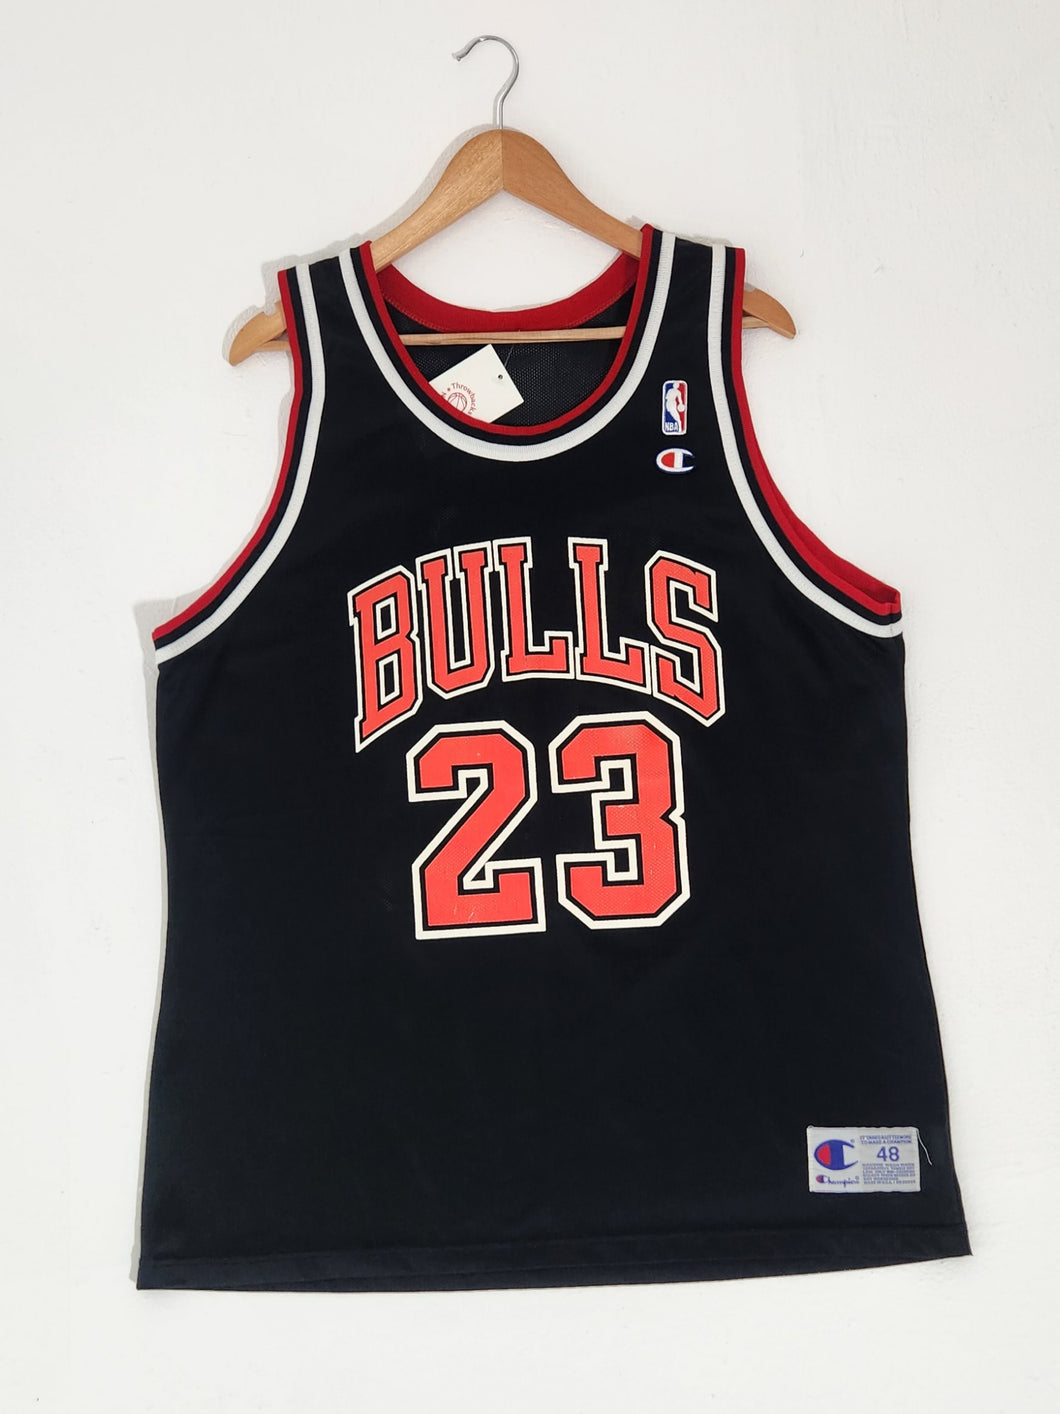 Vintage 90s Champion Chicago Bulls Michael Jordan 23 Red 